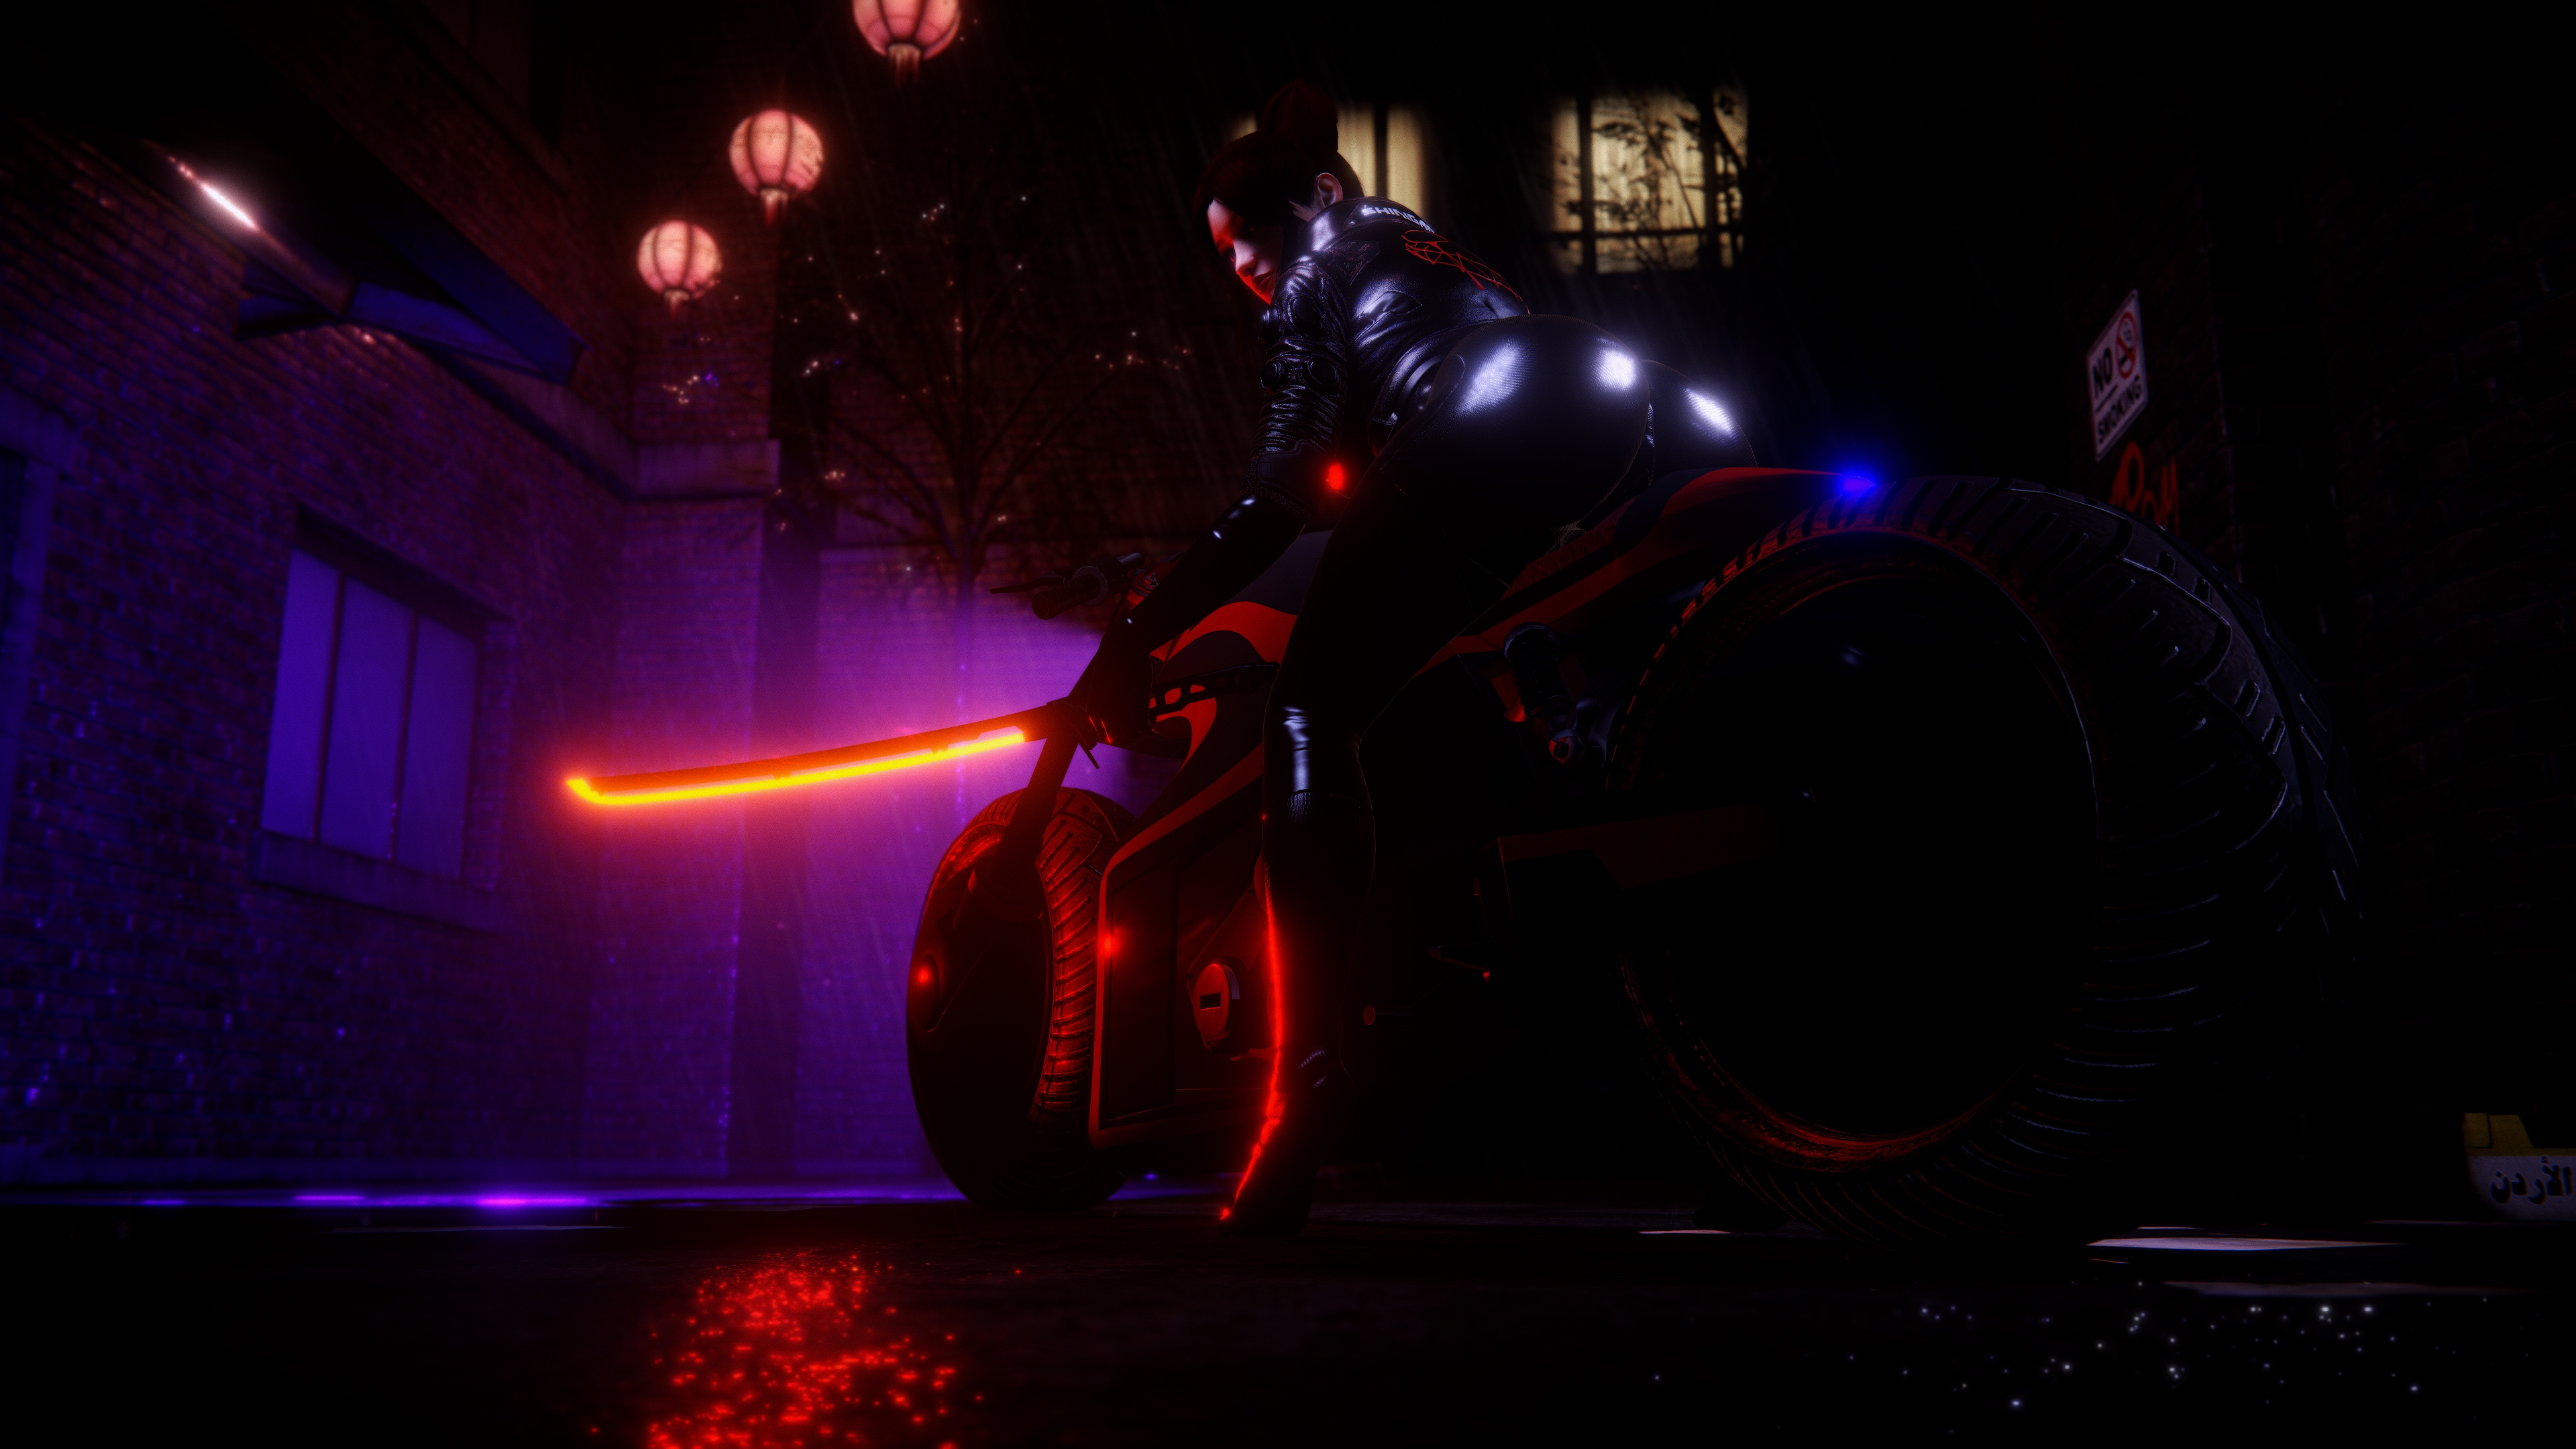 Mary Mushkin NoPixel Digital Art Cyberpunk Motorcycle Katana Dark Paper Lantern Looking Back Leather 3840x2160